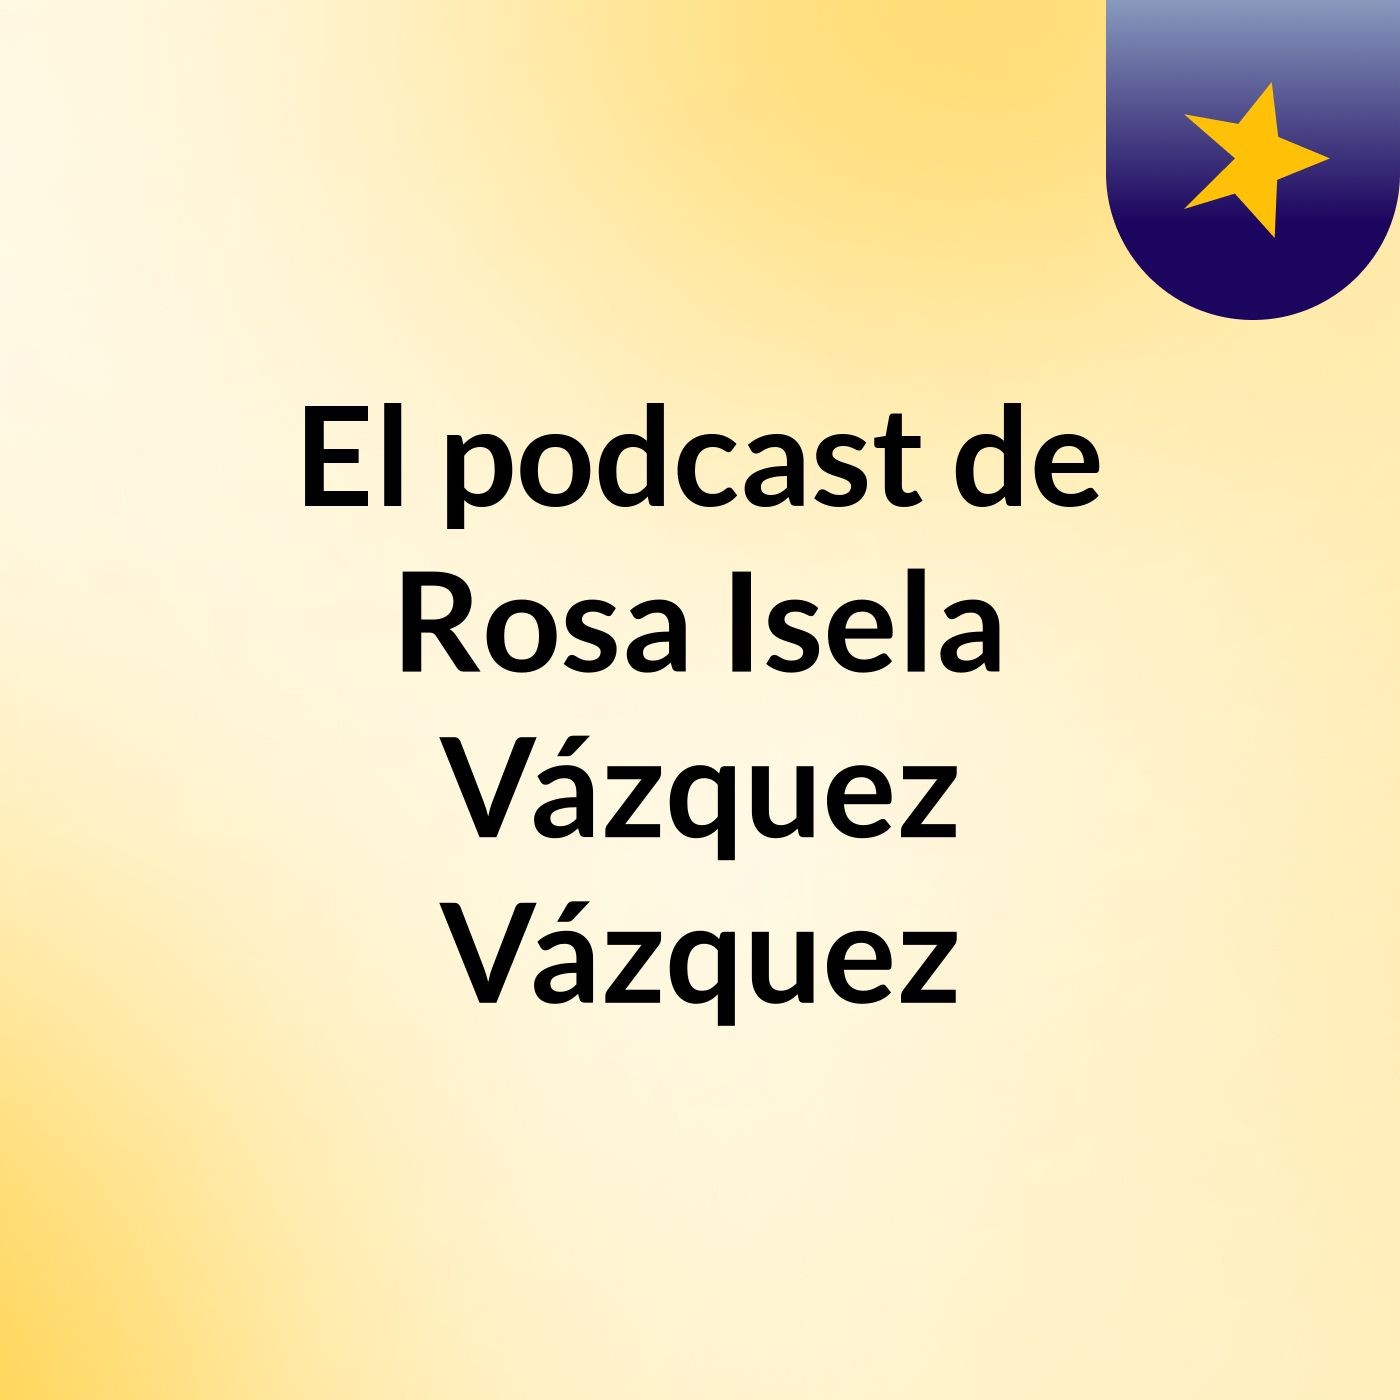 El podcast de Rosa Isela Vázquez Vázquez